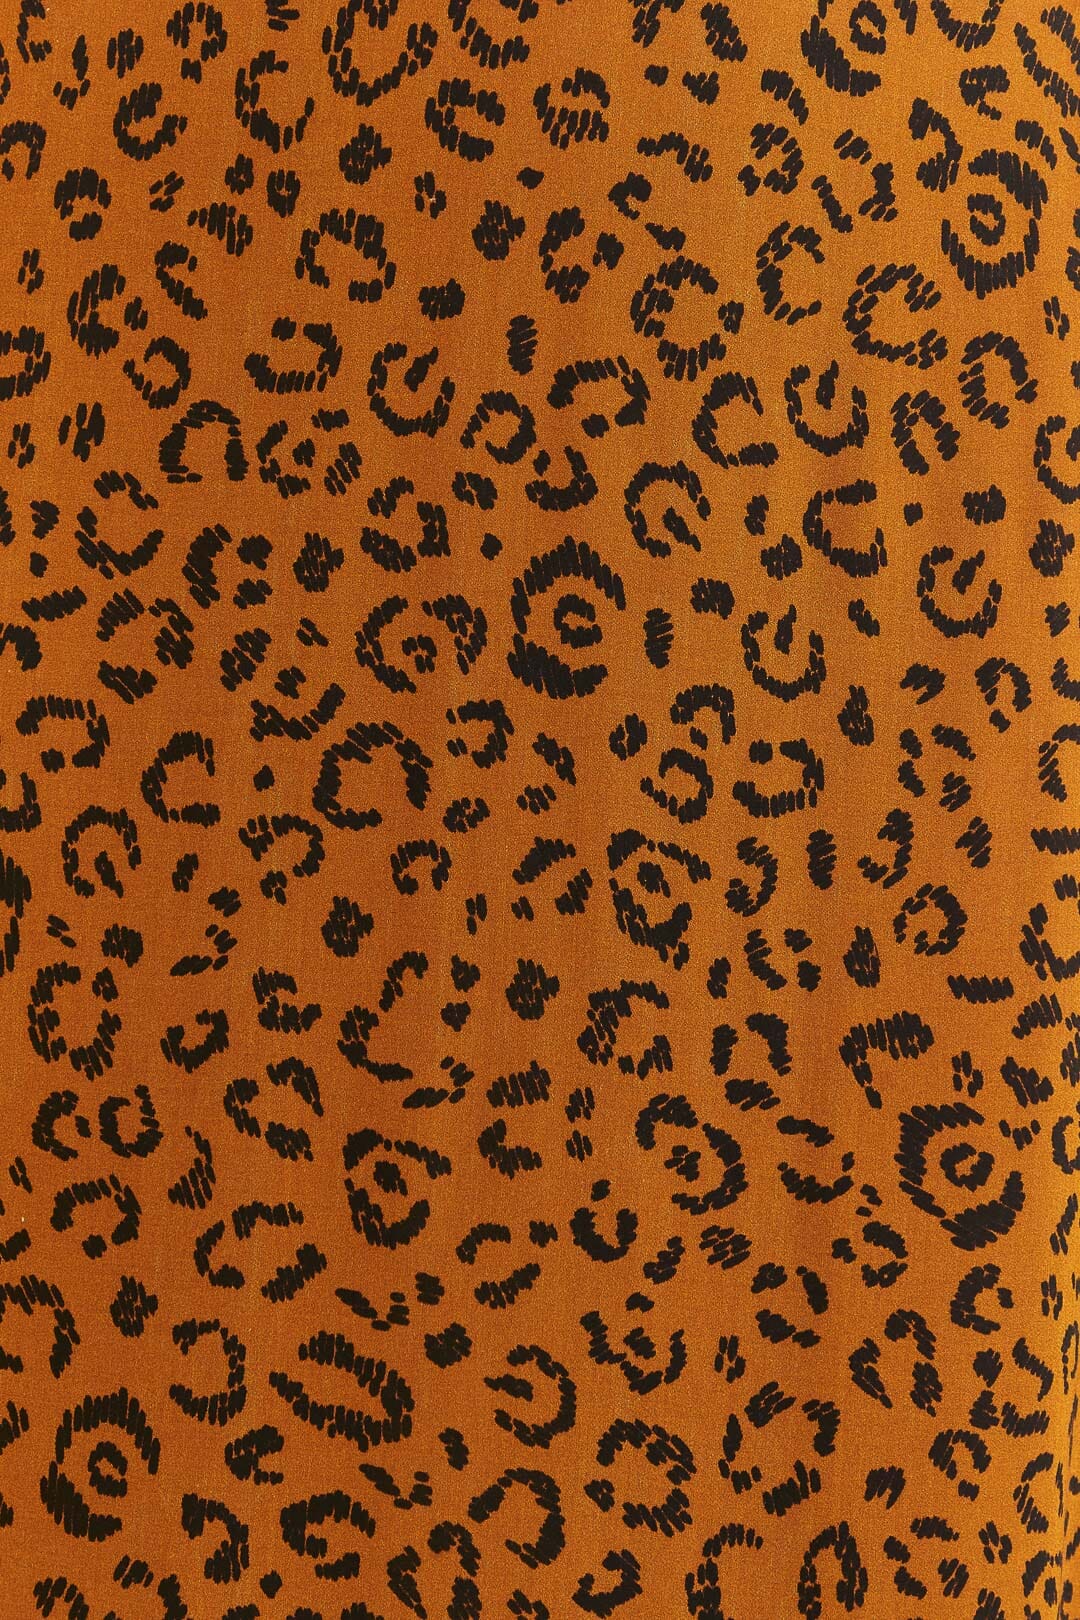 Black Leopards Texture Midi Skirt